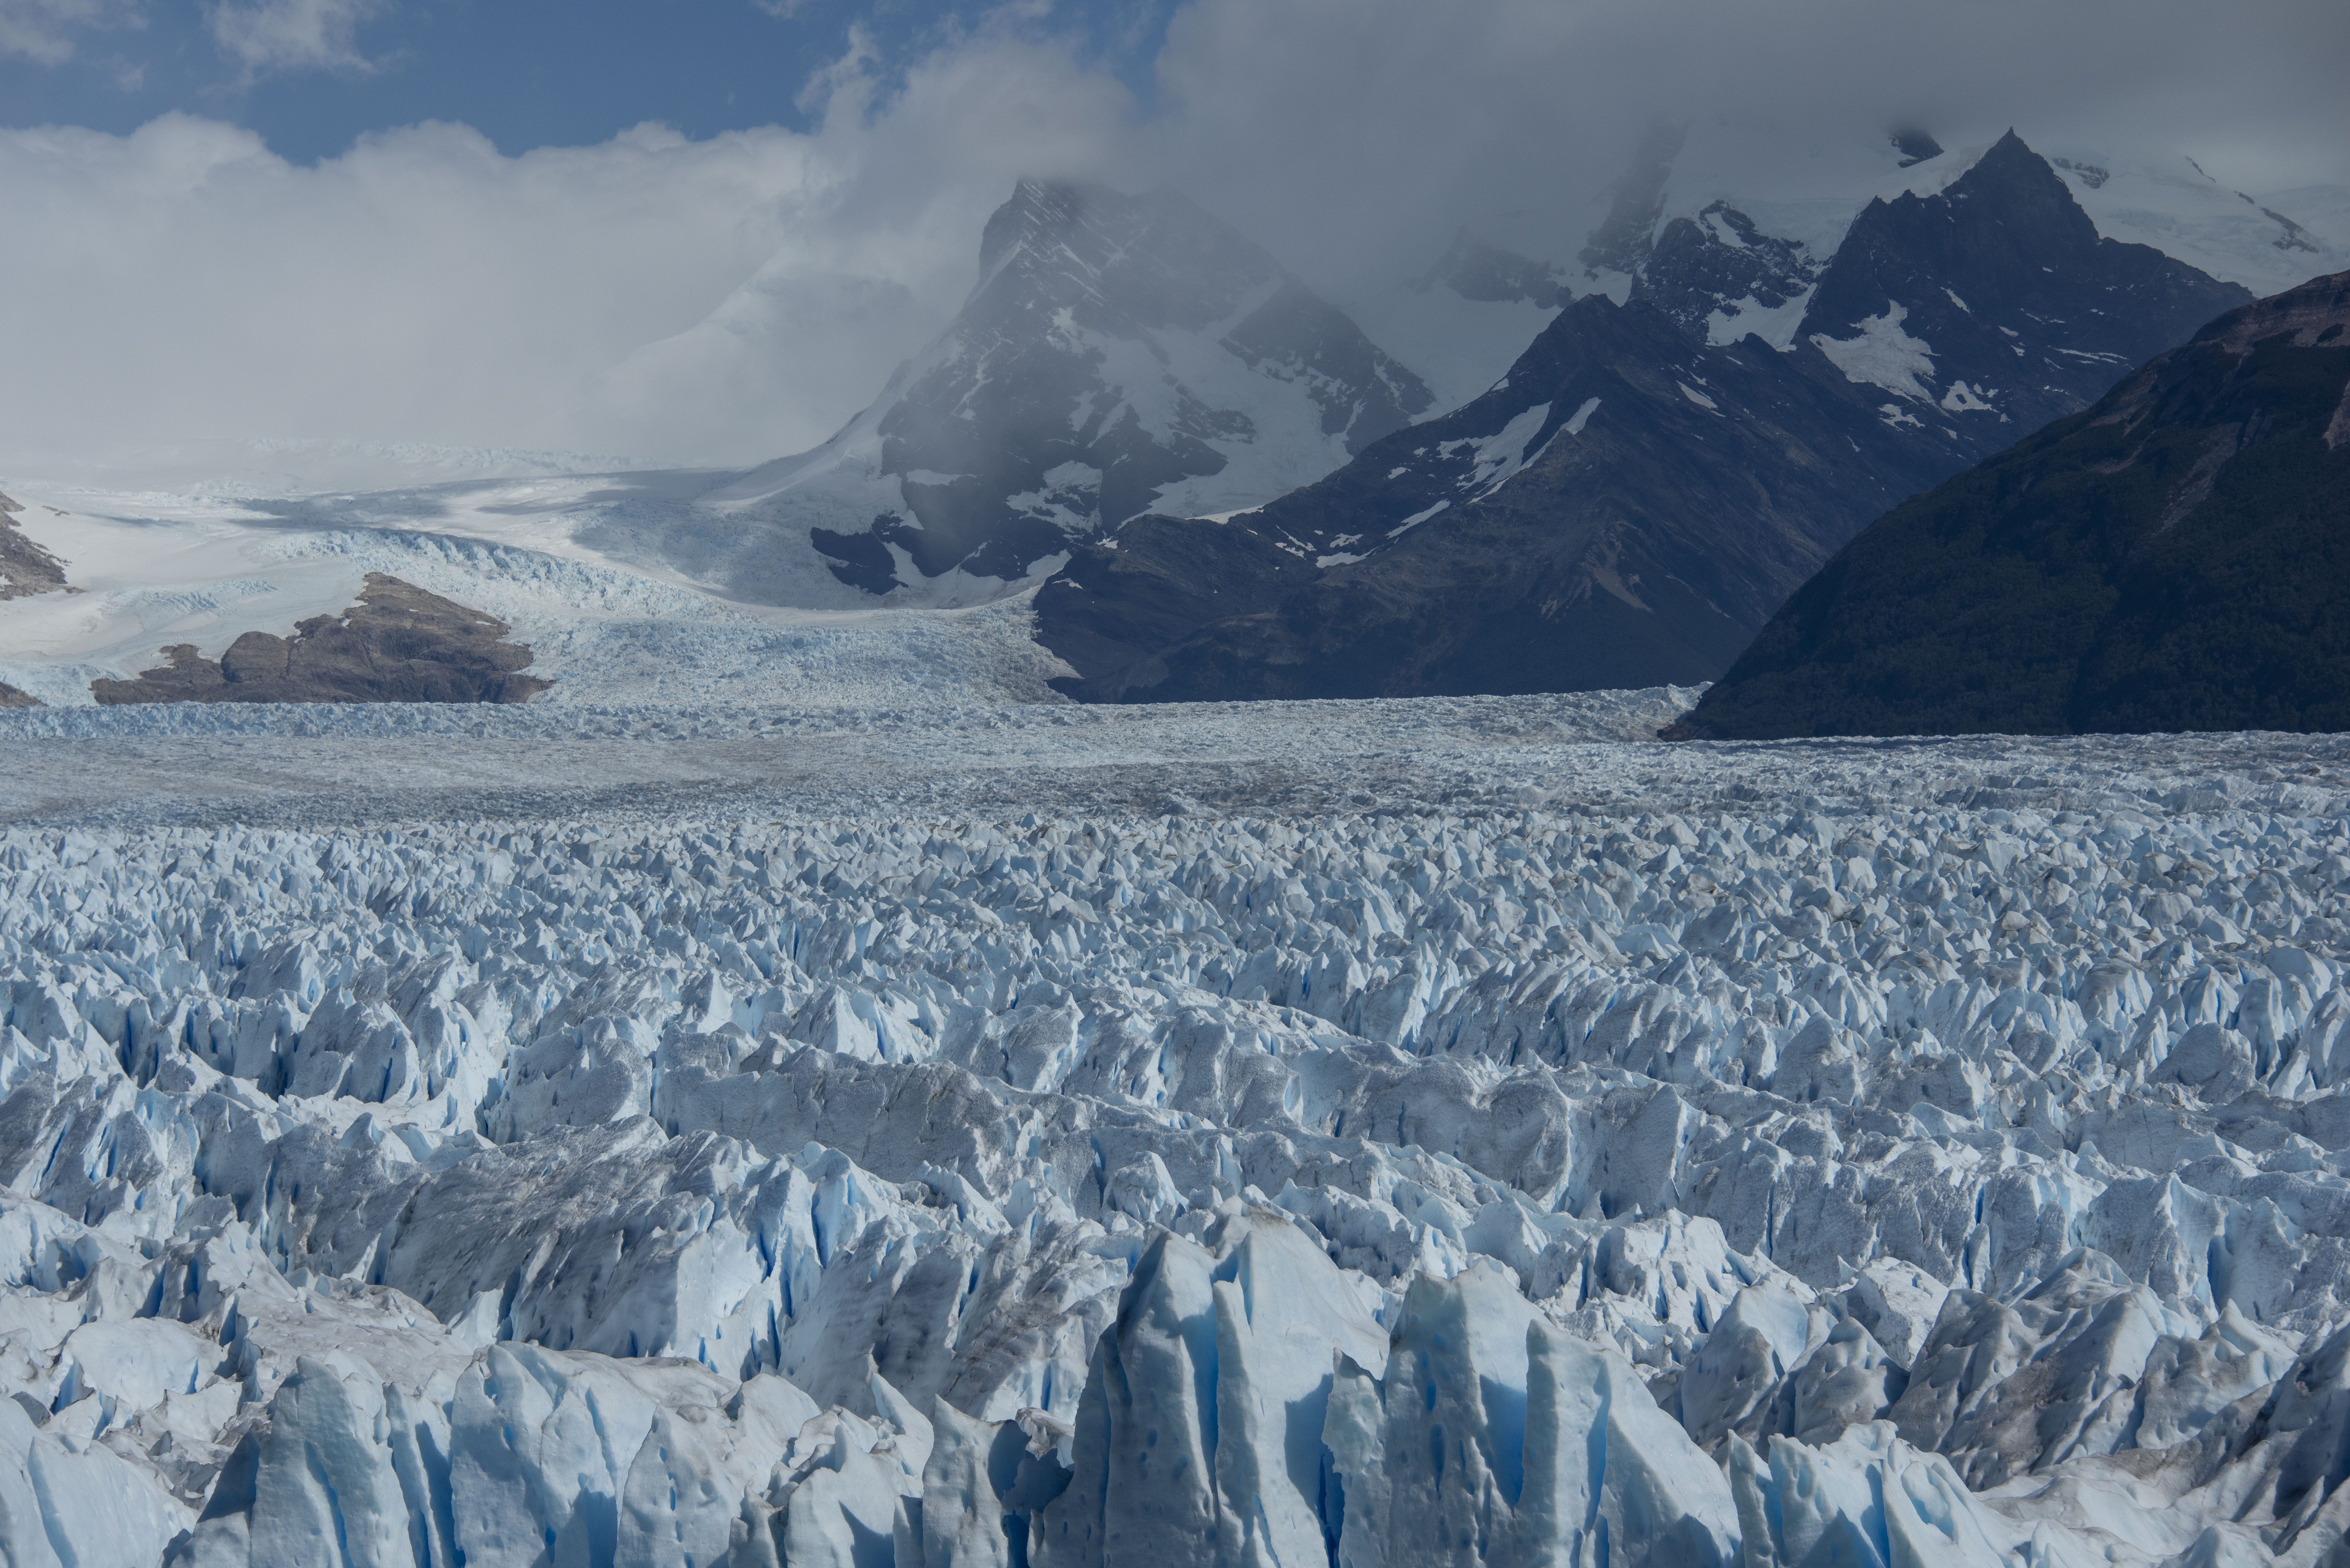 155191 descargar imagen paisaje, naturaleza, montañas, hielo, glaciar, congelado: fondos de pantalla y protectores de pantalla gratis